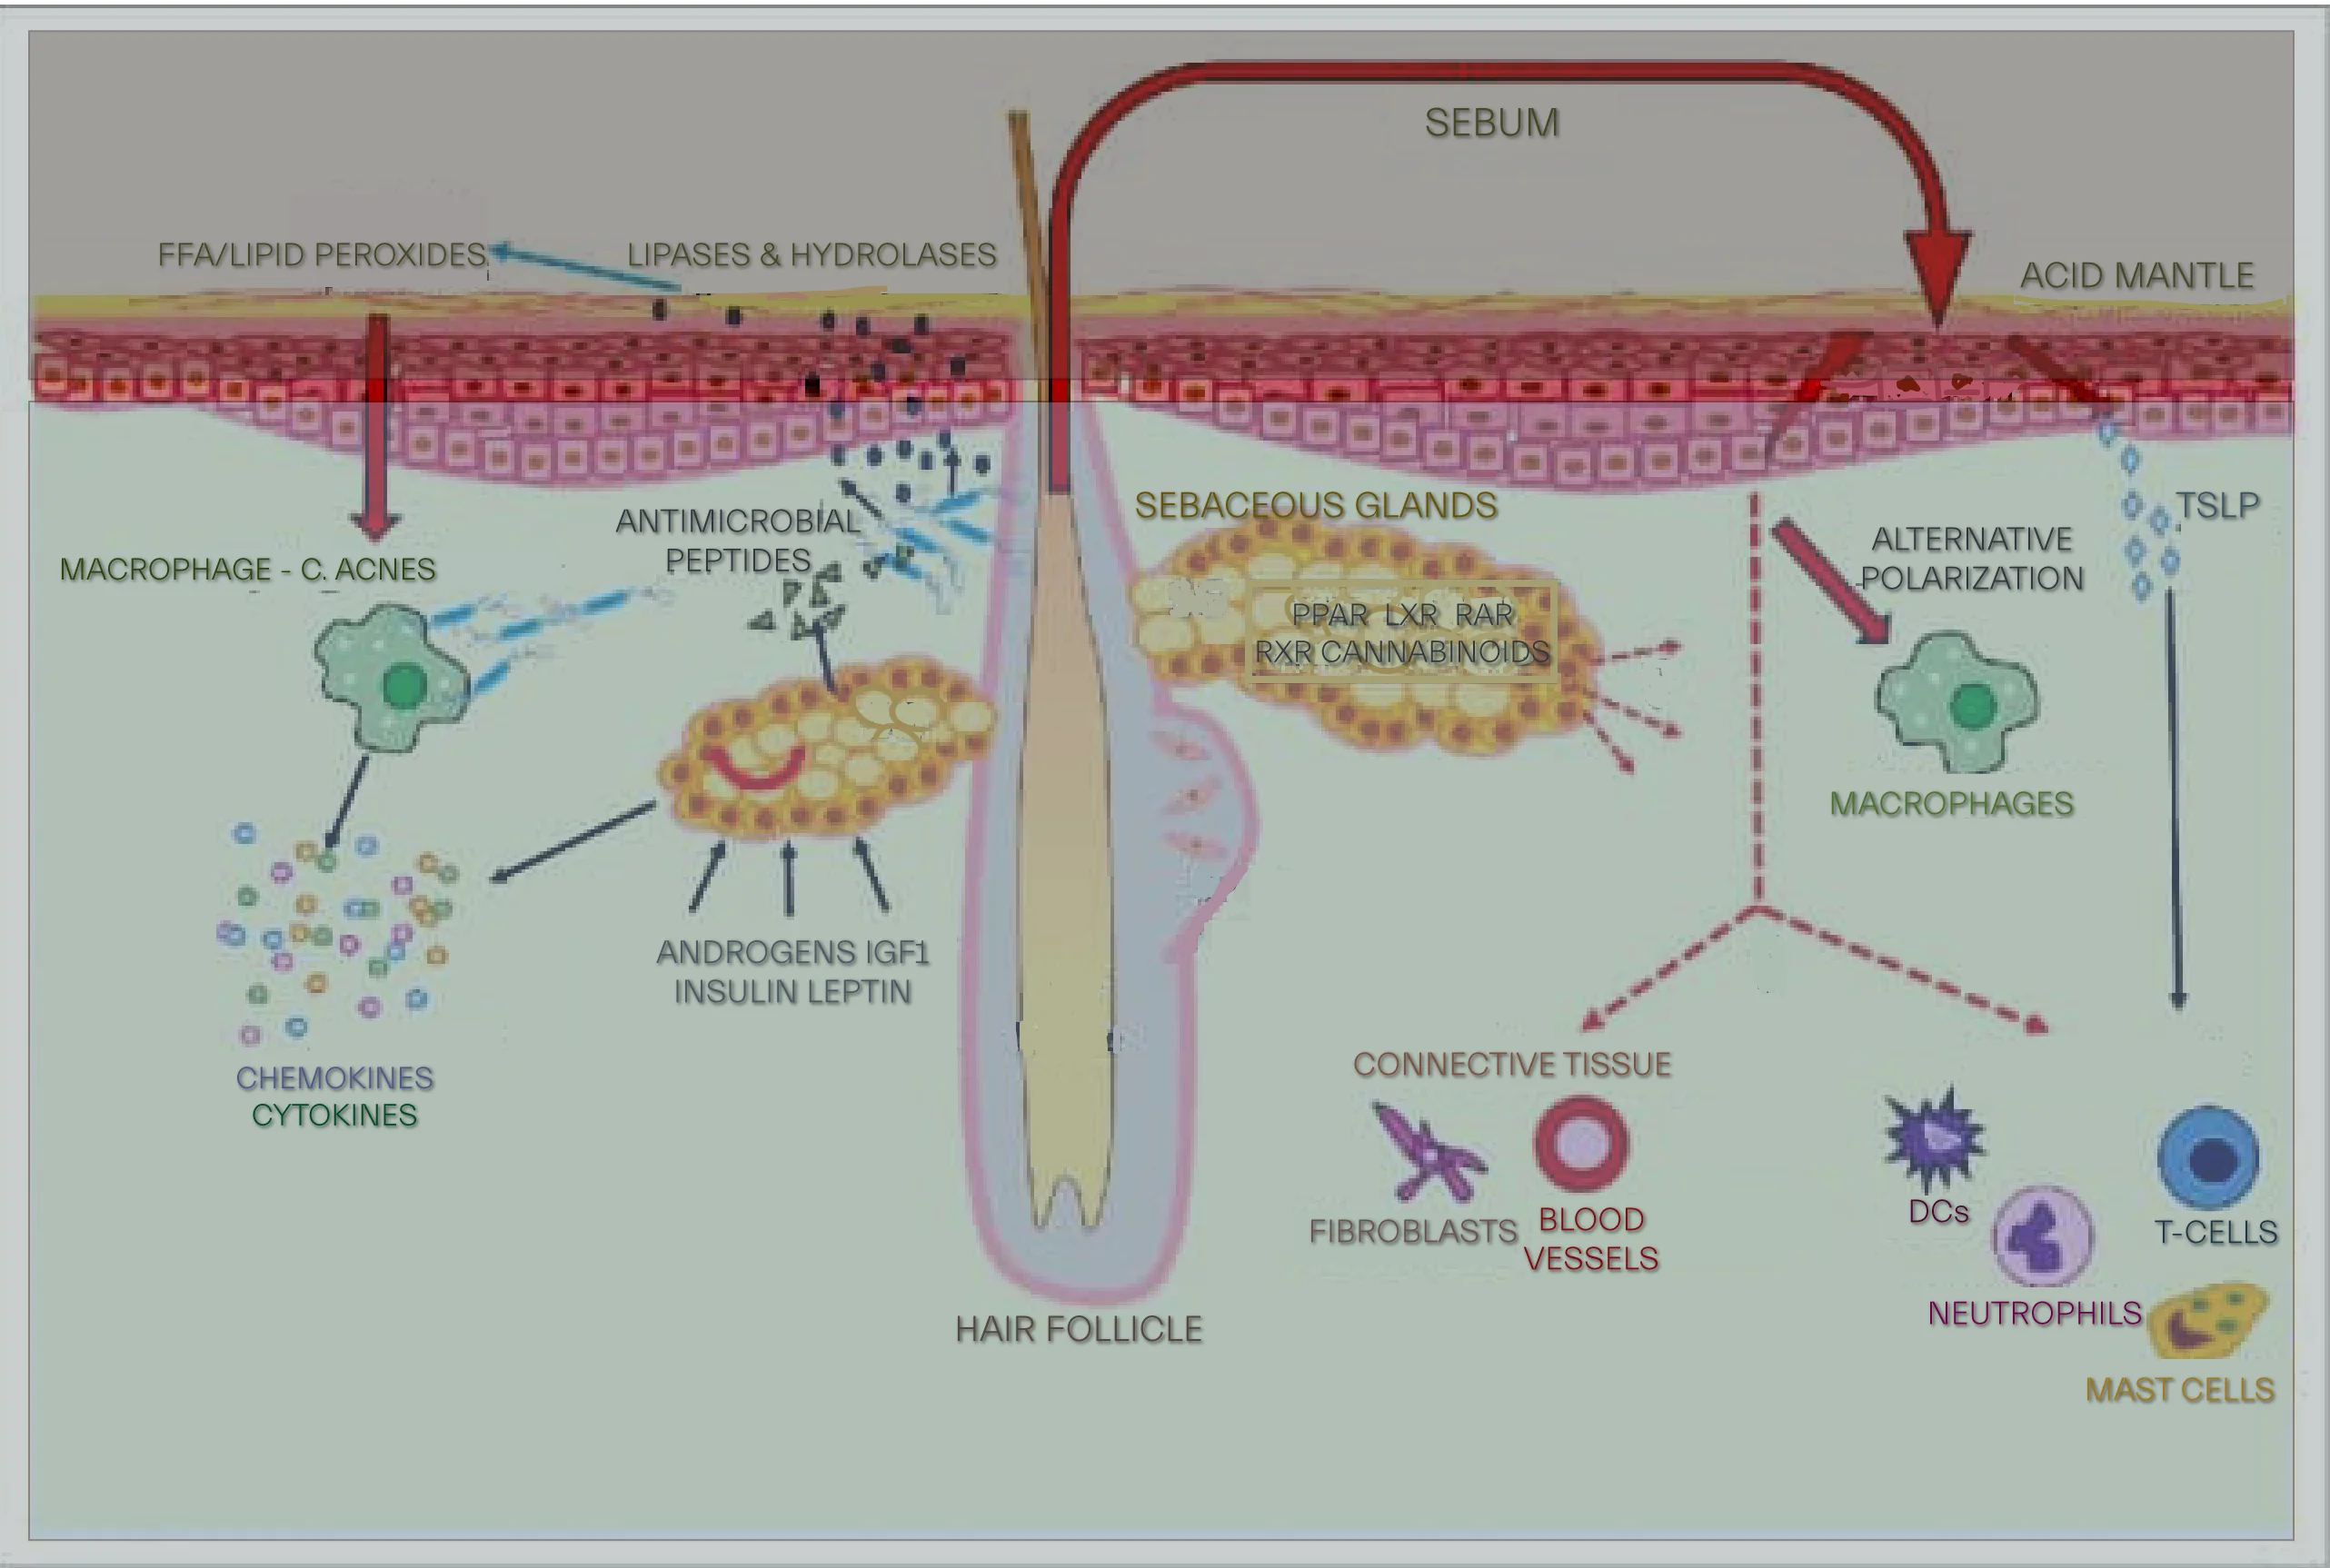 Various factors influencing sebum regulation and sebaceous activity